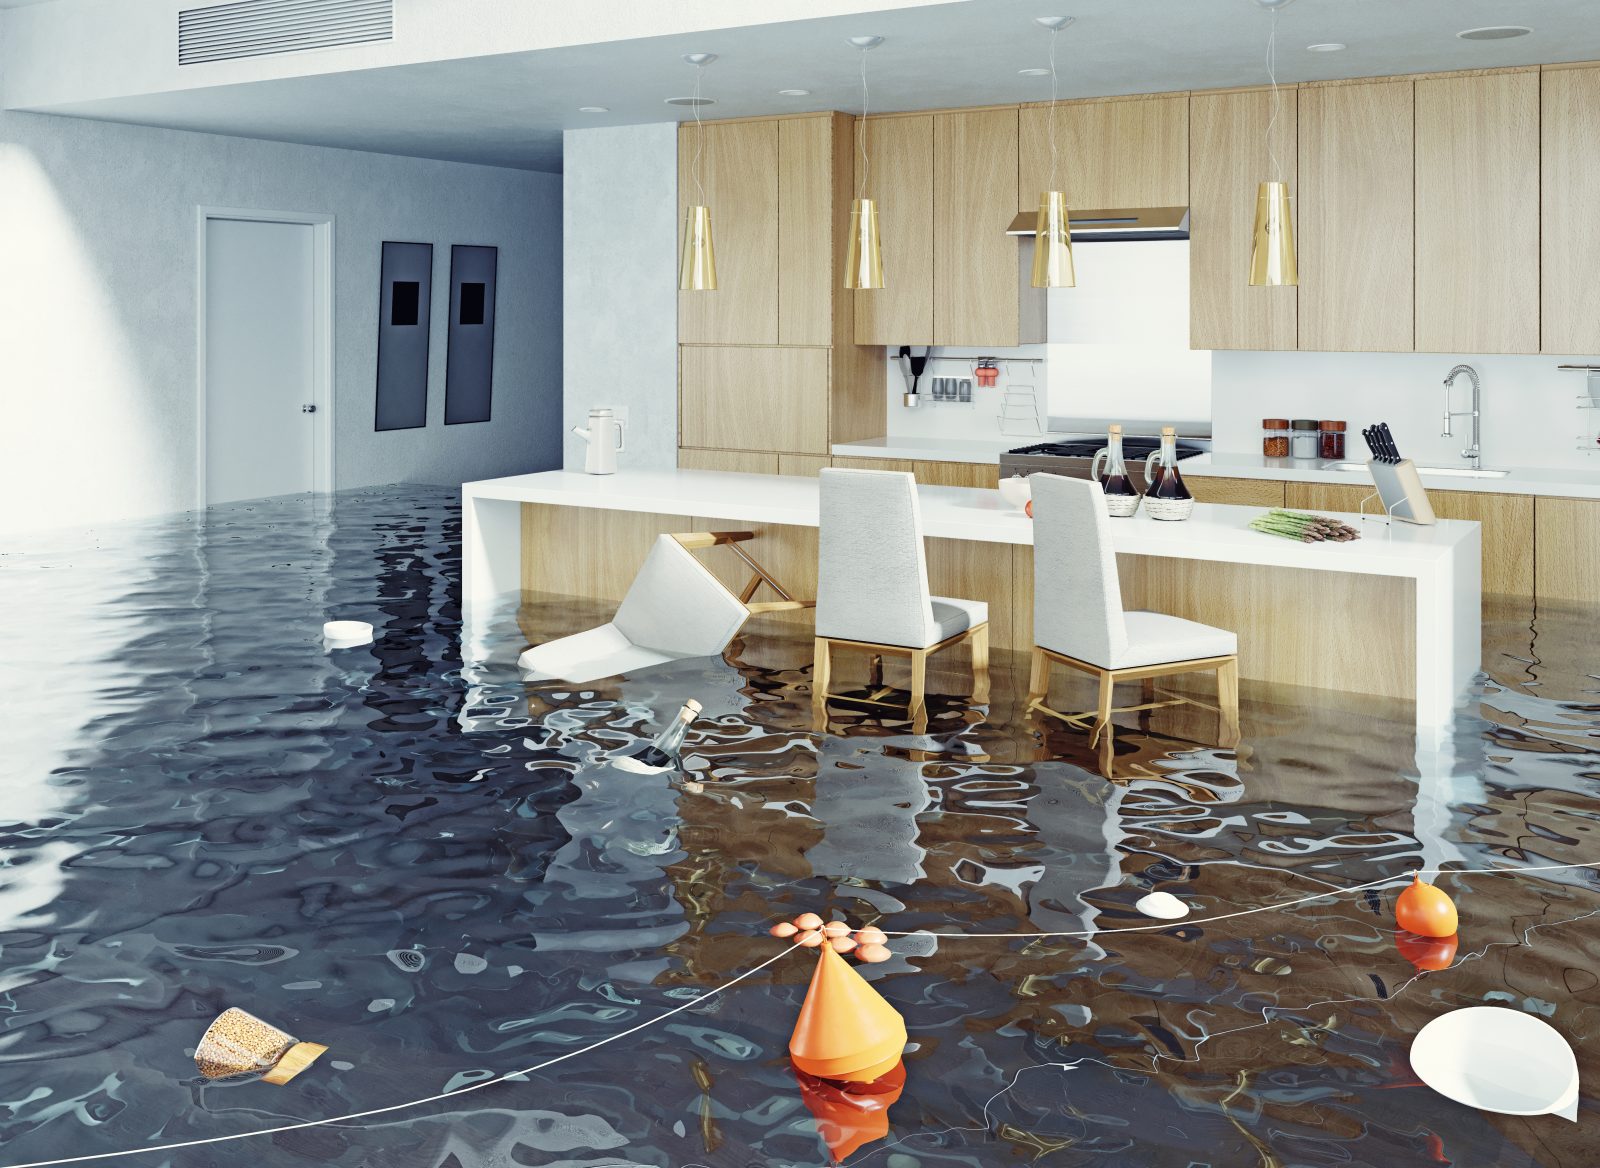 flood water come in kitchen sink